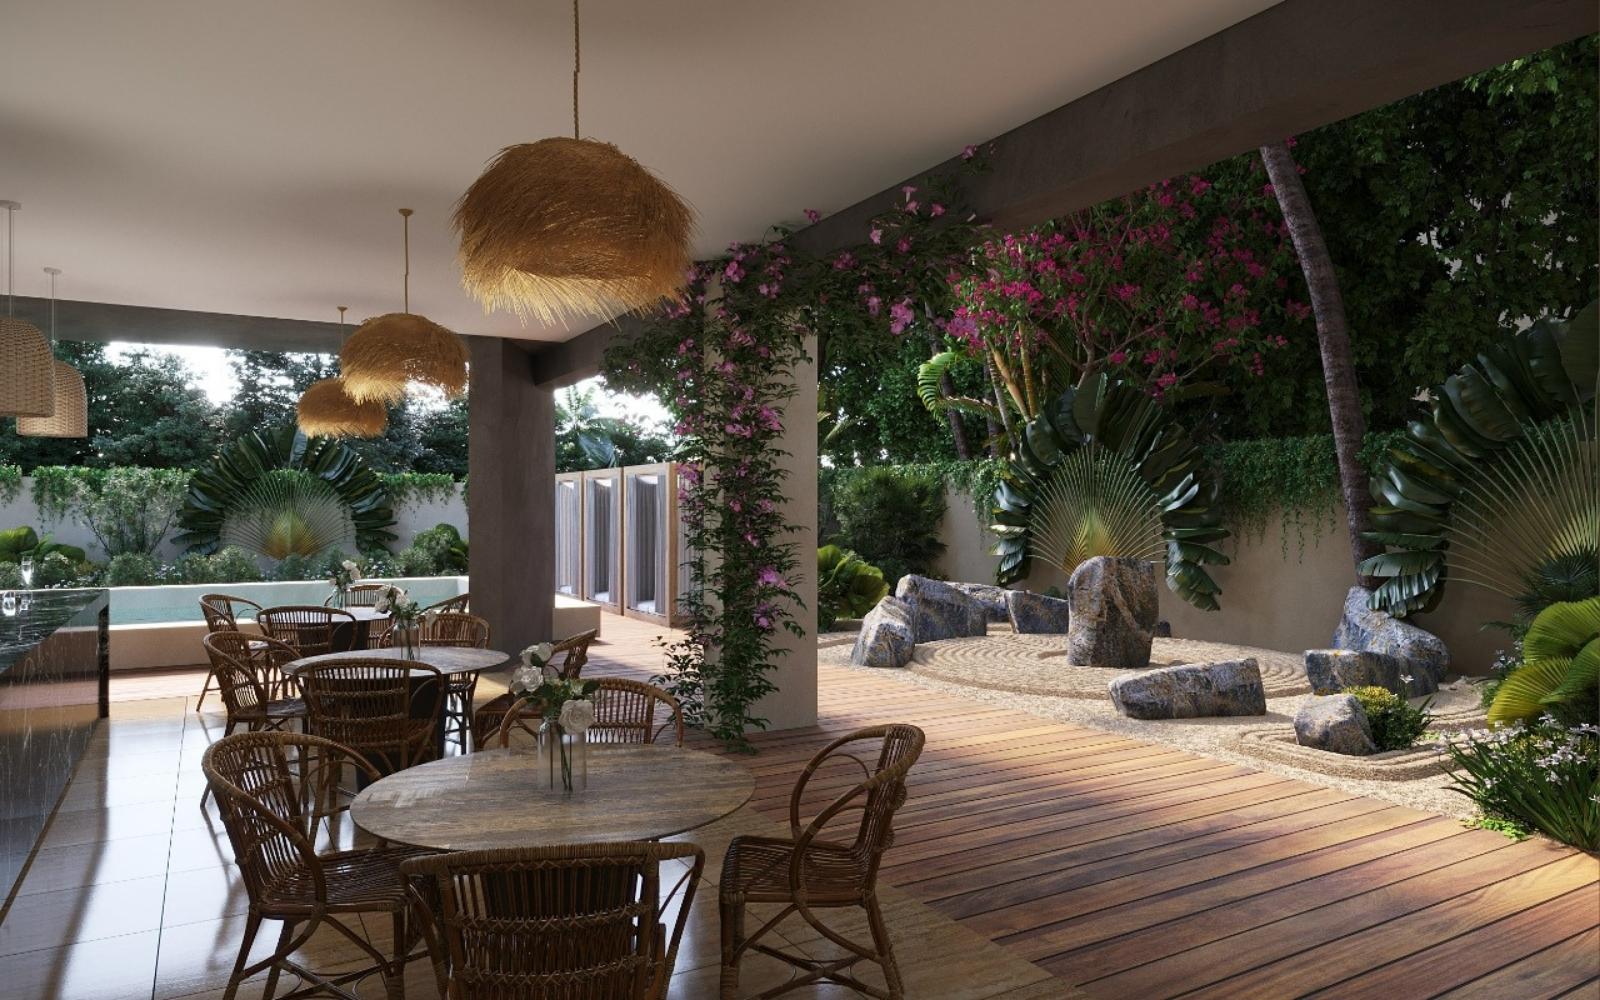 Apartment with rooftop pool, barbecue area, business center, concierge, in Villas La Hacienda for sale, Merida North Zone